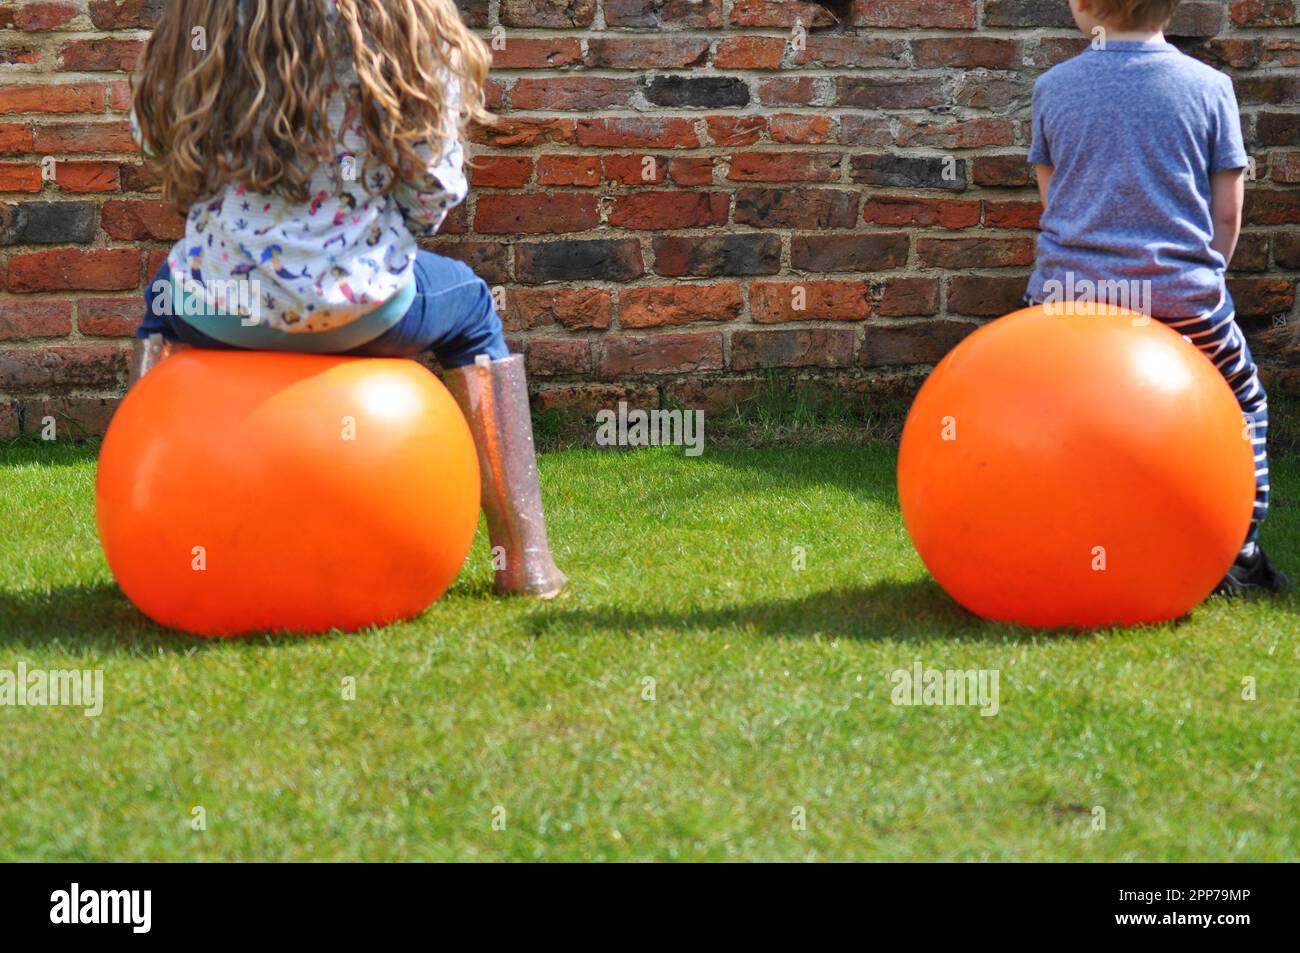 Children bouncing in a garden on an orange space hopper toy Stock Photo